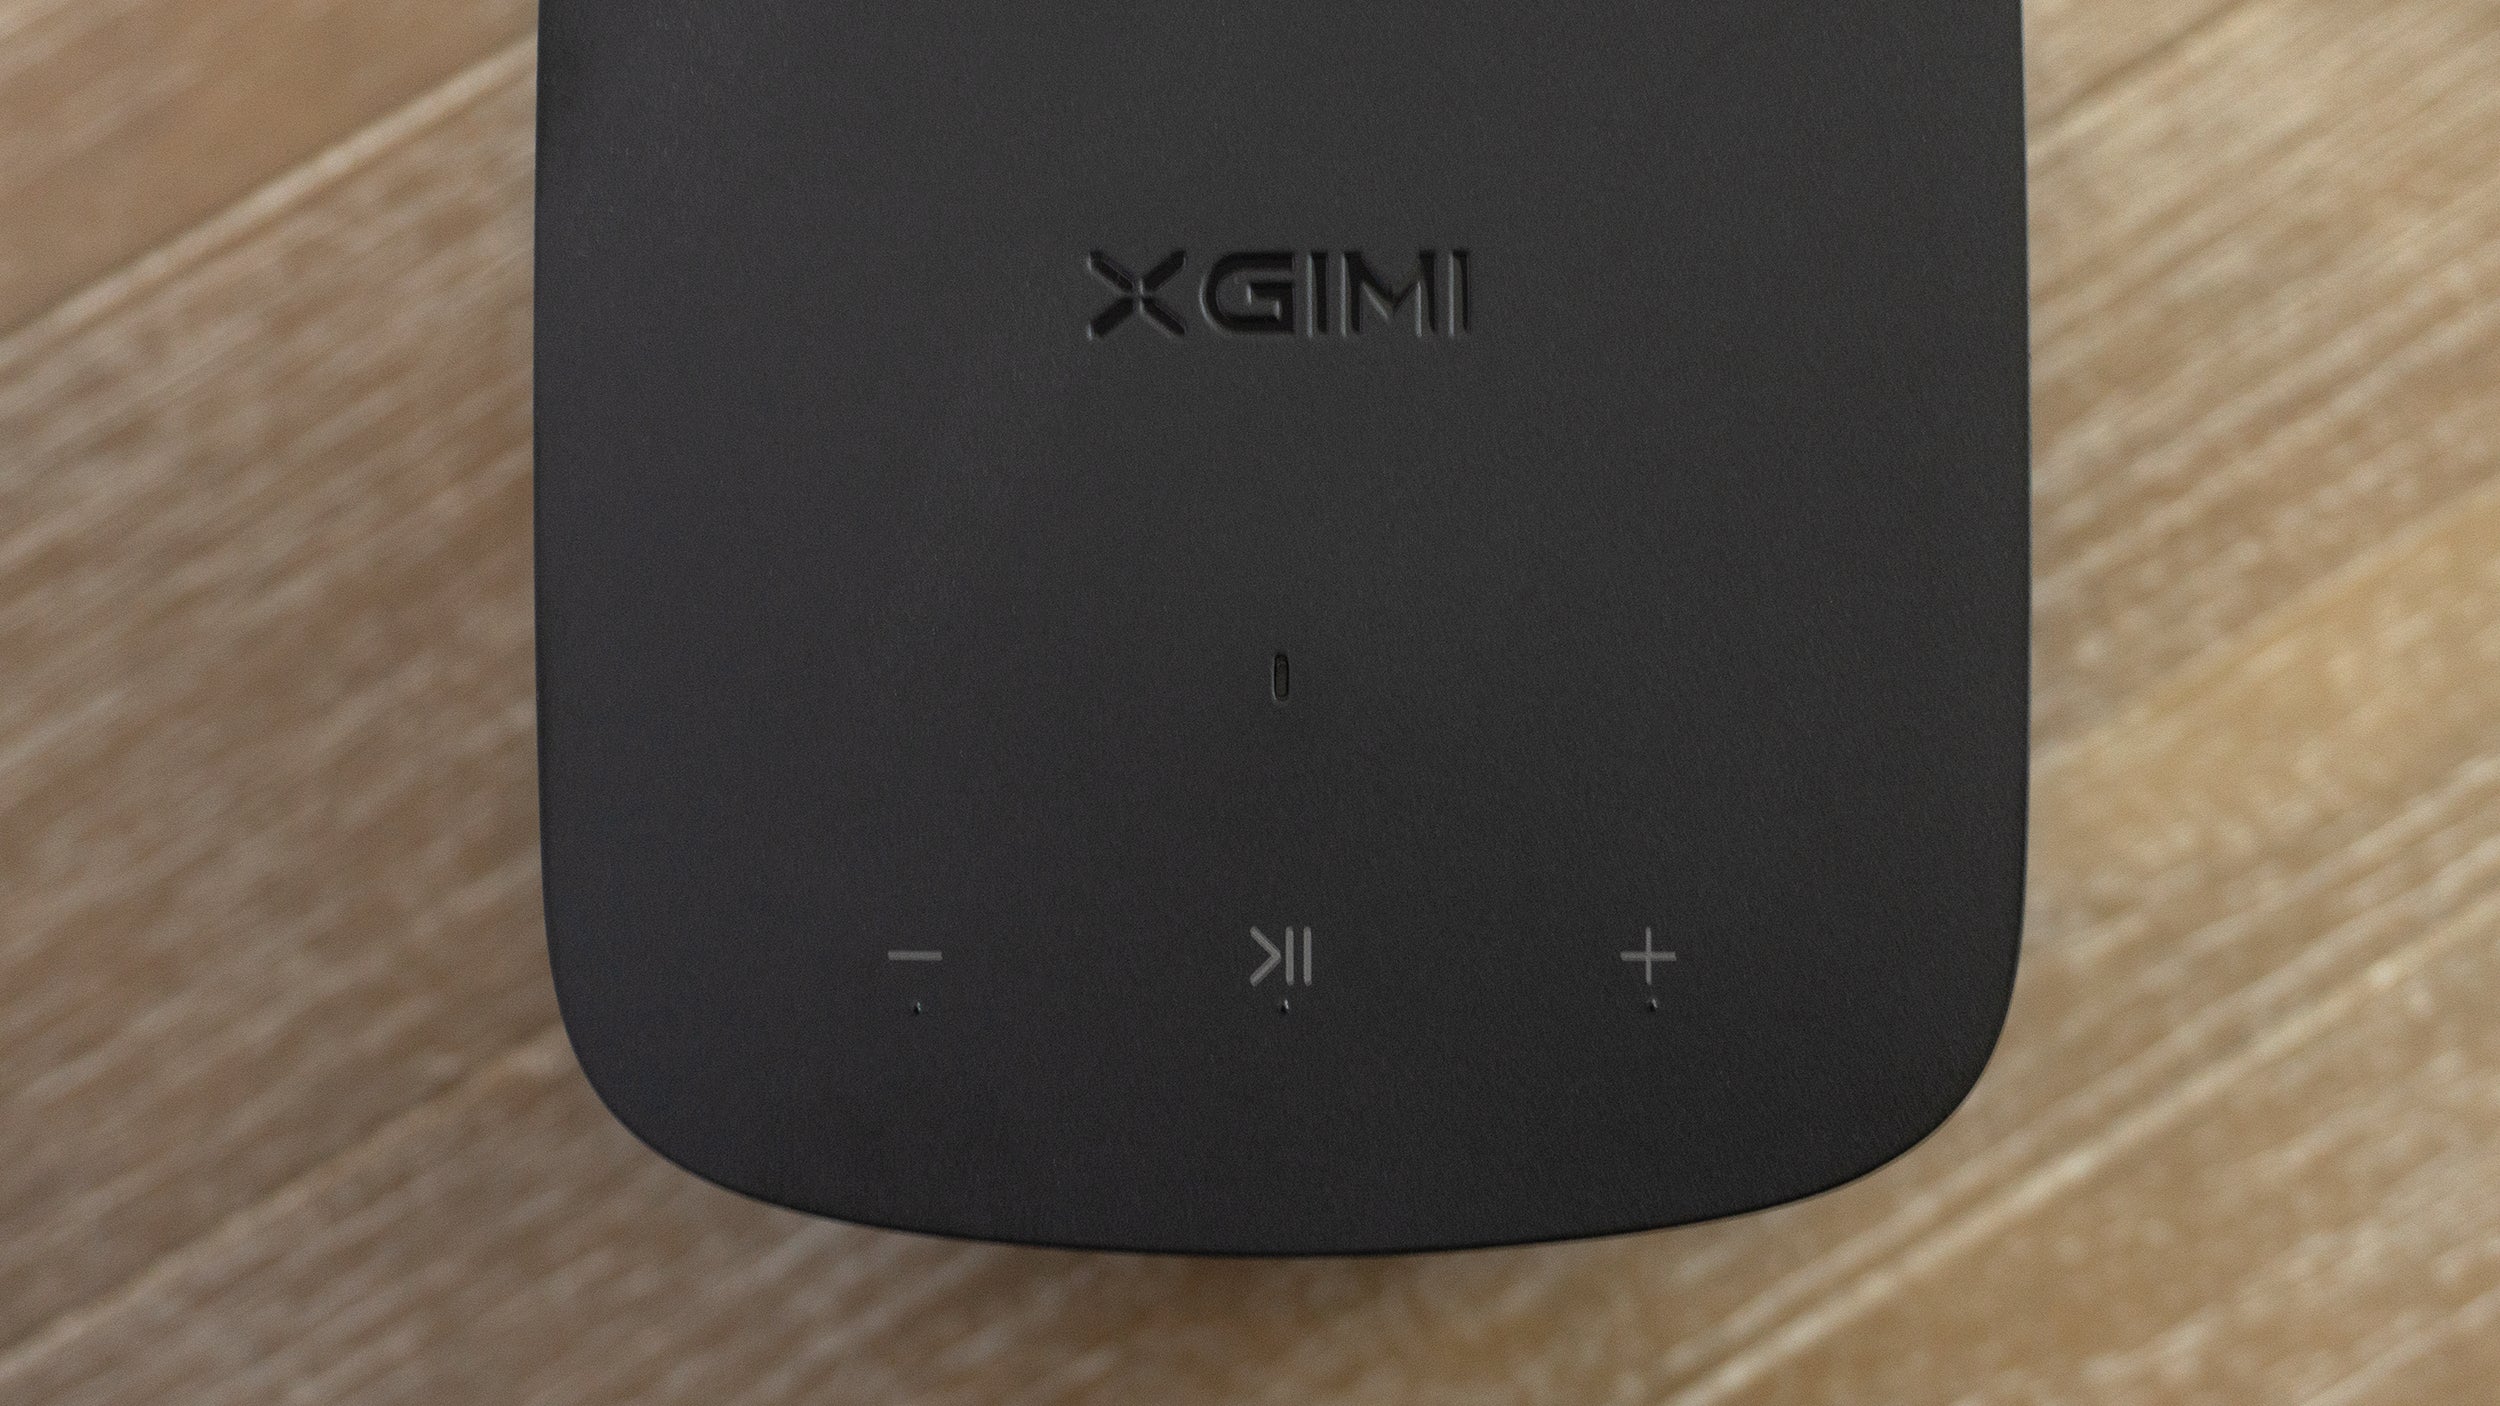 The XGIMI Halo+ has a very limited number of on-device controls. (Photo: Andrew Liszewski | Gizmodo)